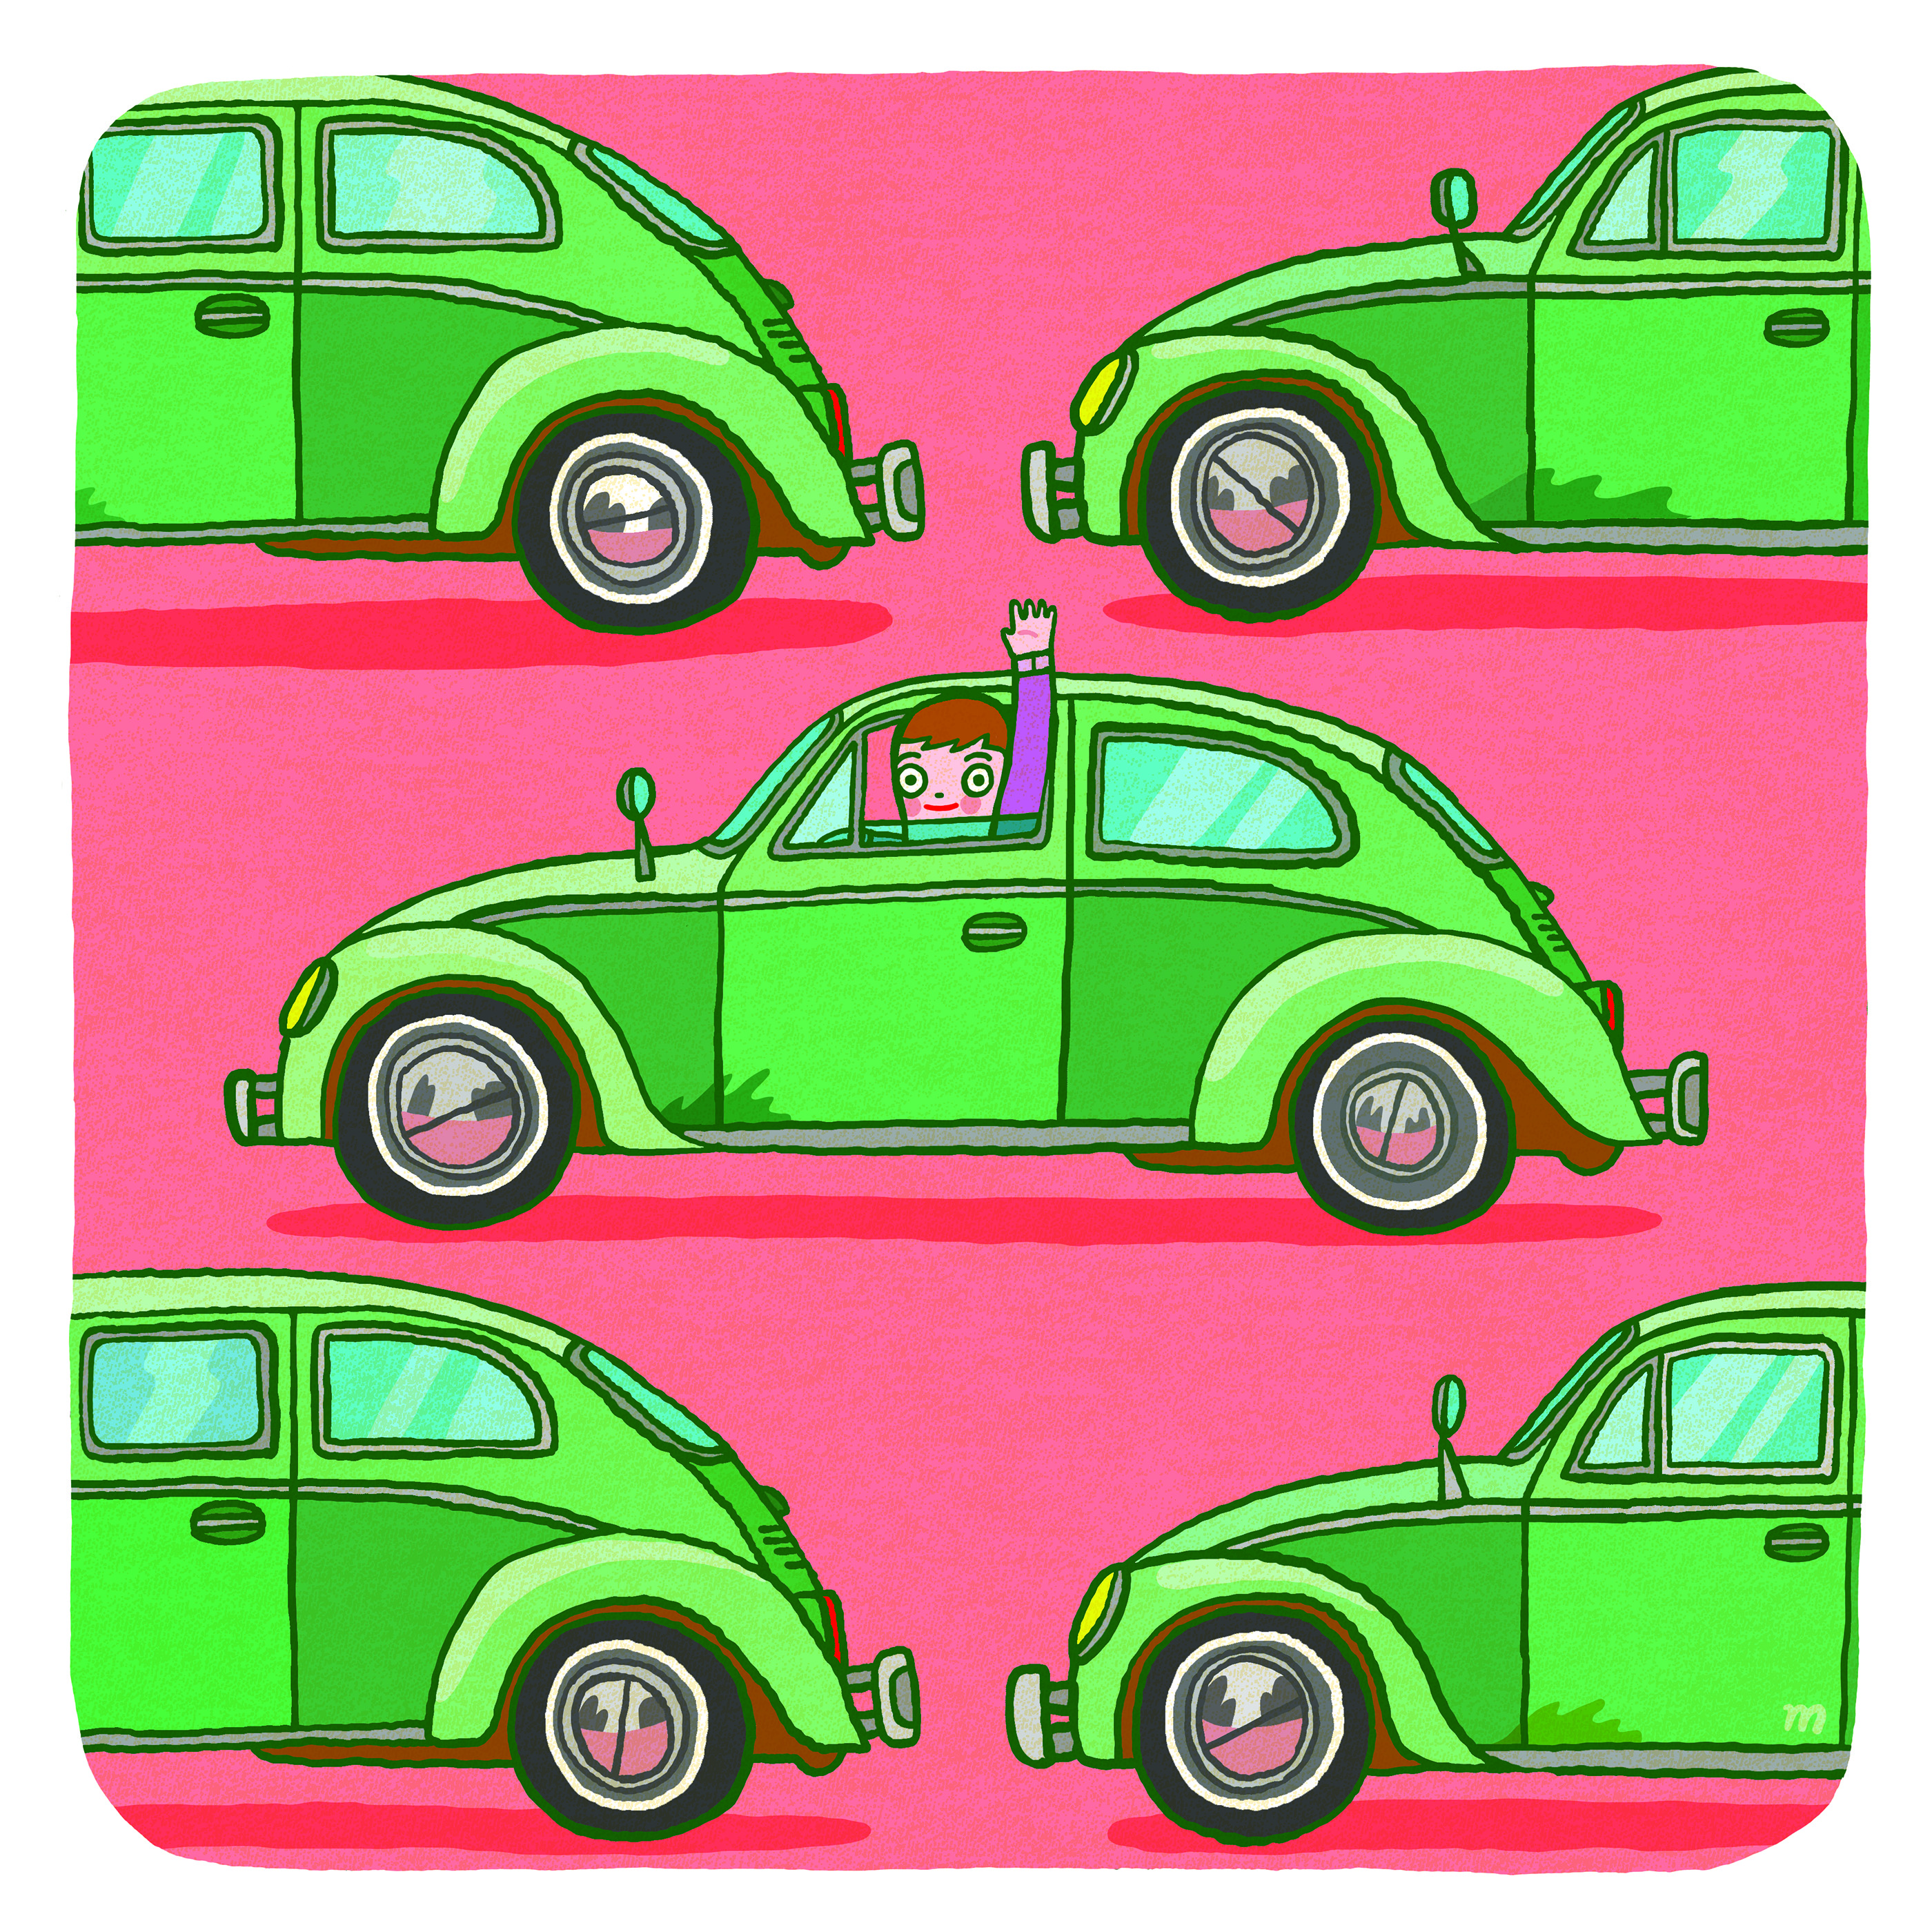 illustration of green Volkswagen beetles on pink background by Aaron Meshon